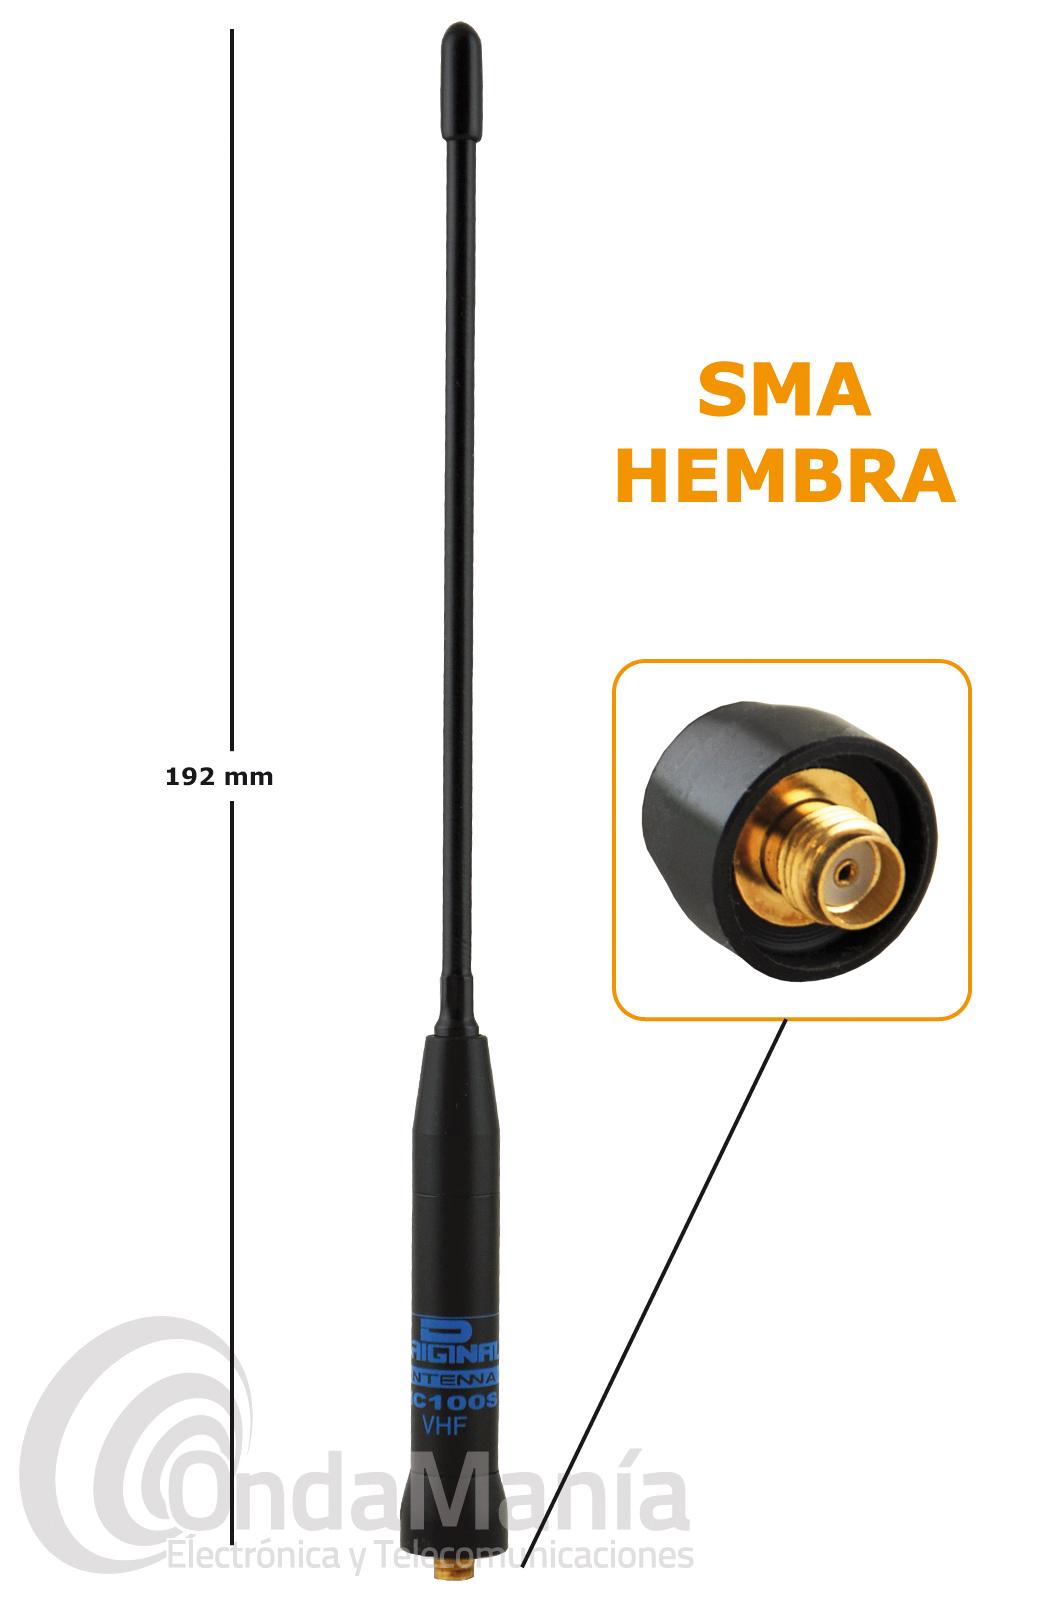 RHD-771. Antena emisora SMA invertido VHF/UHF